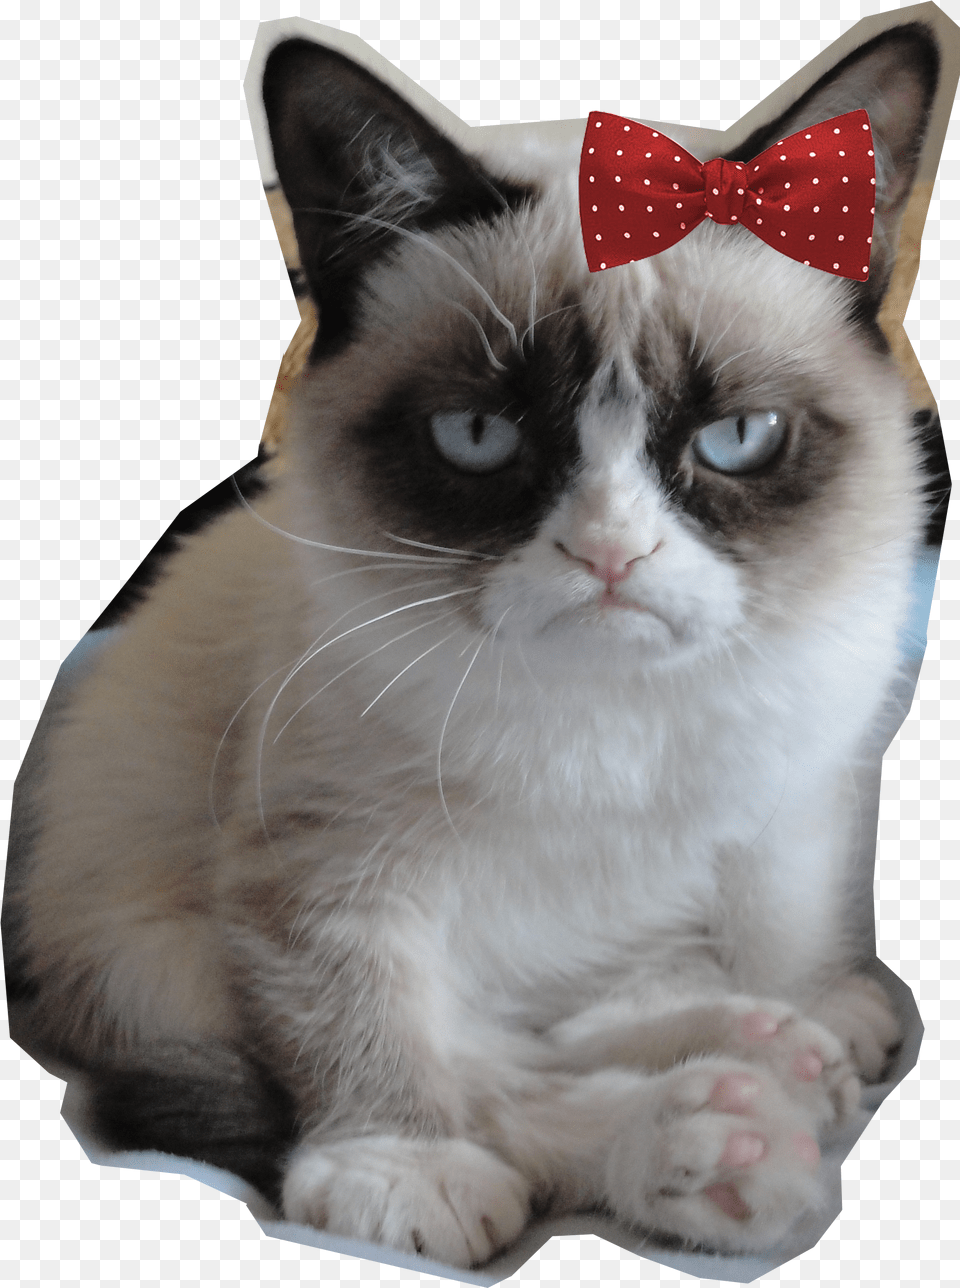 Grumpy Grumpy Cat Is My Spirit Animal, Accessories, Formal Wear, Tie, Mammal Free Png